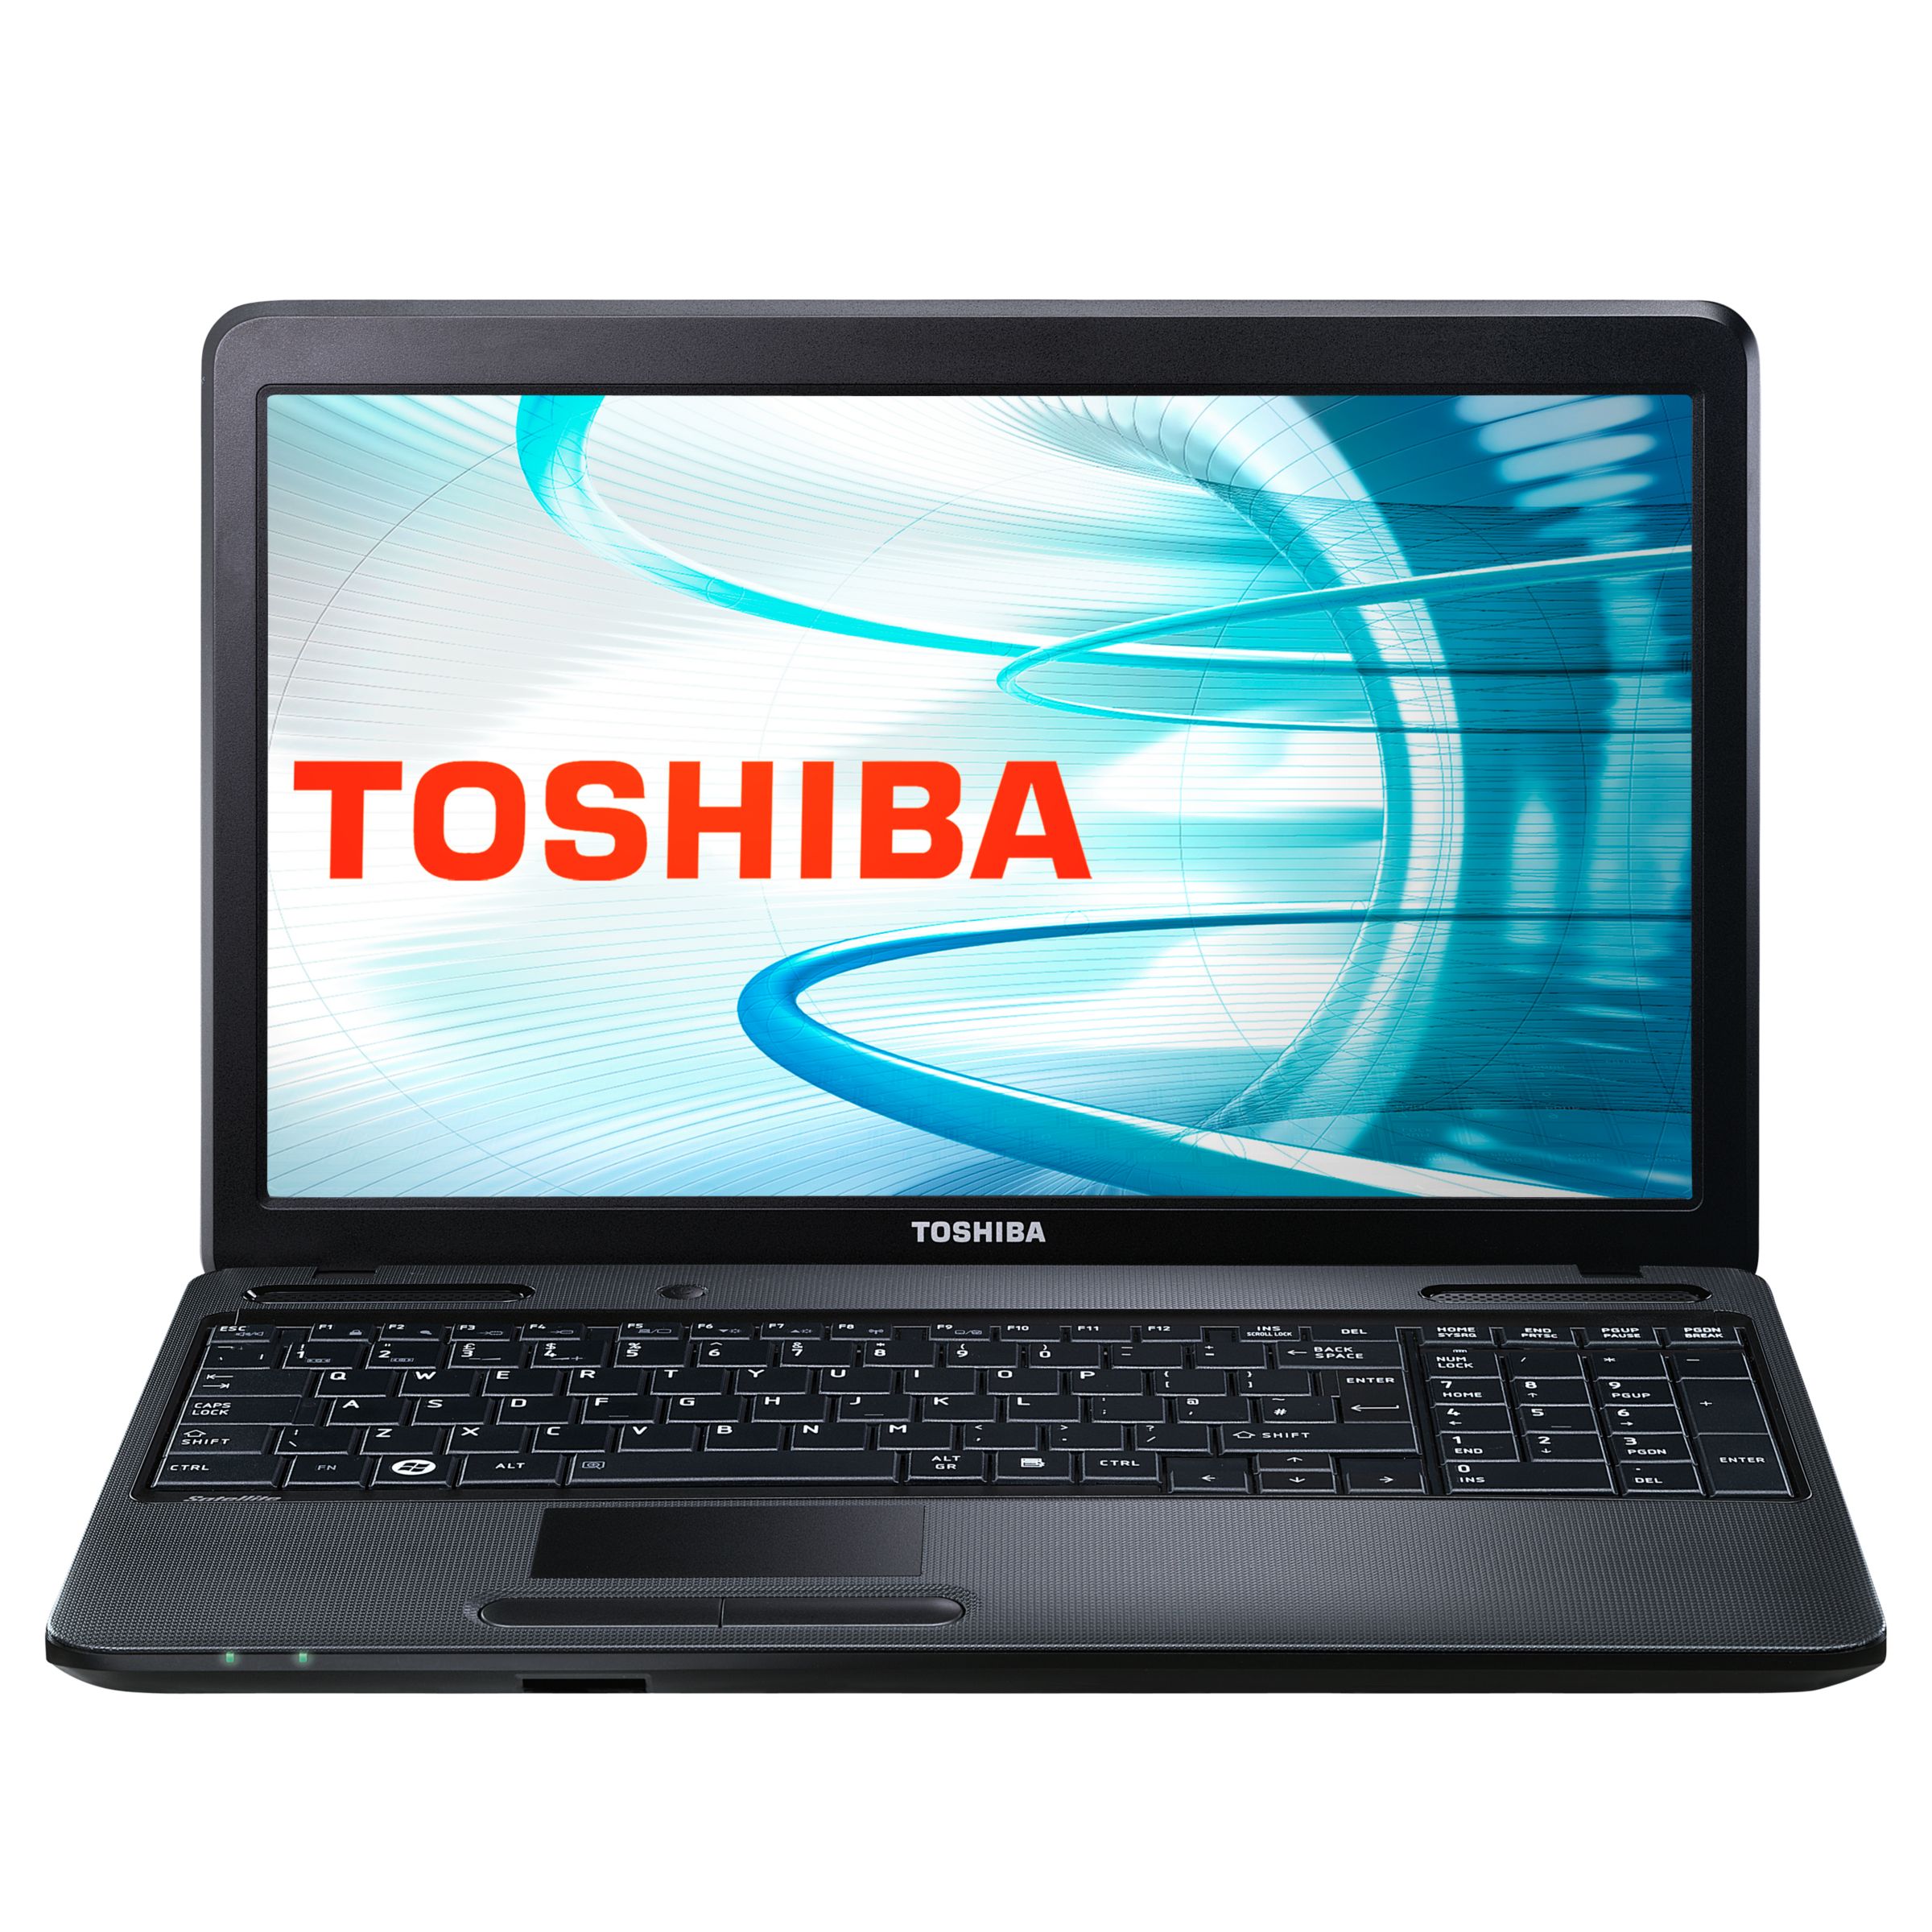 Toshiba Satellite L650-1GC Laptop, Intel Core i3, 320GB, 2.4Ghz, 4GB RAM with 15.6 Inch Display at John Lewis